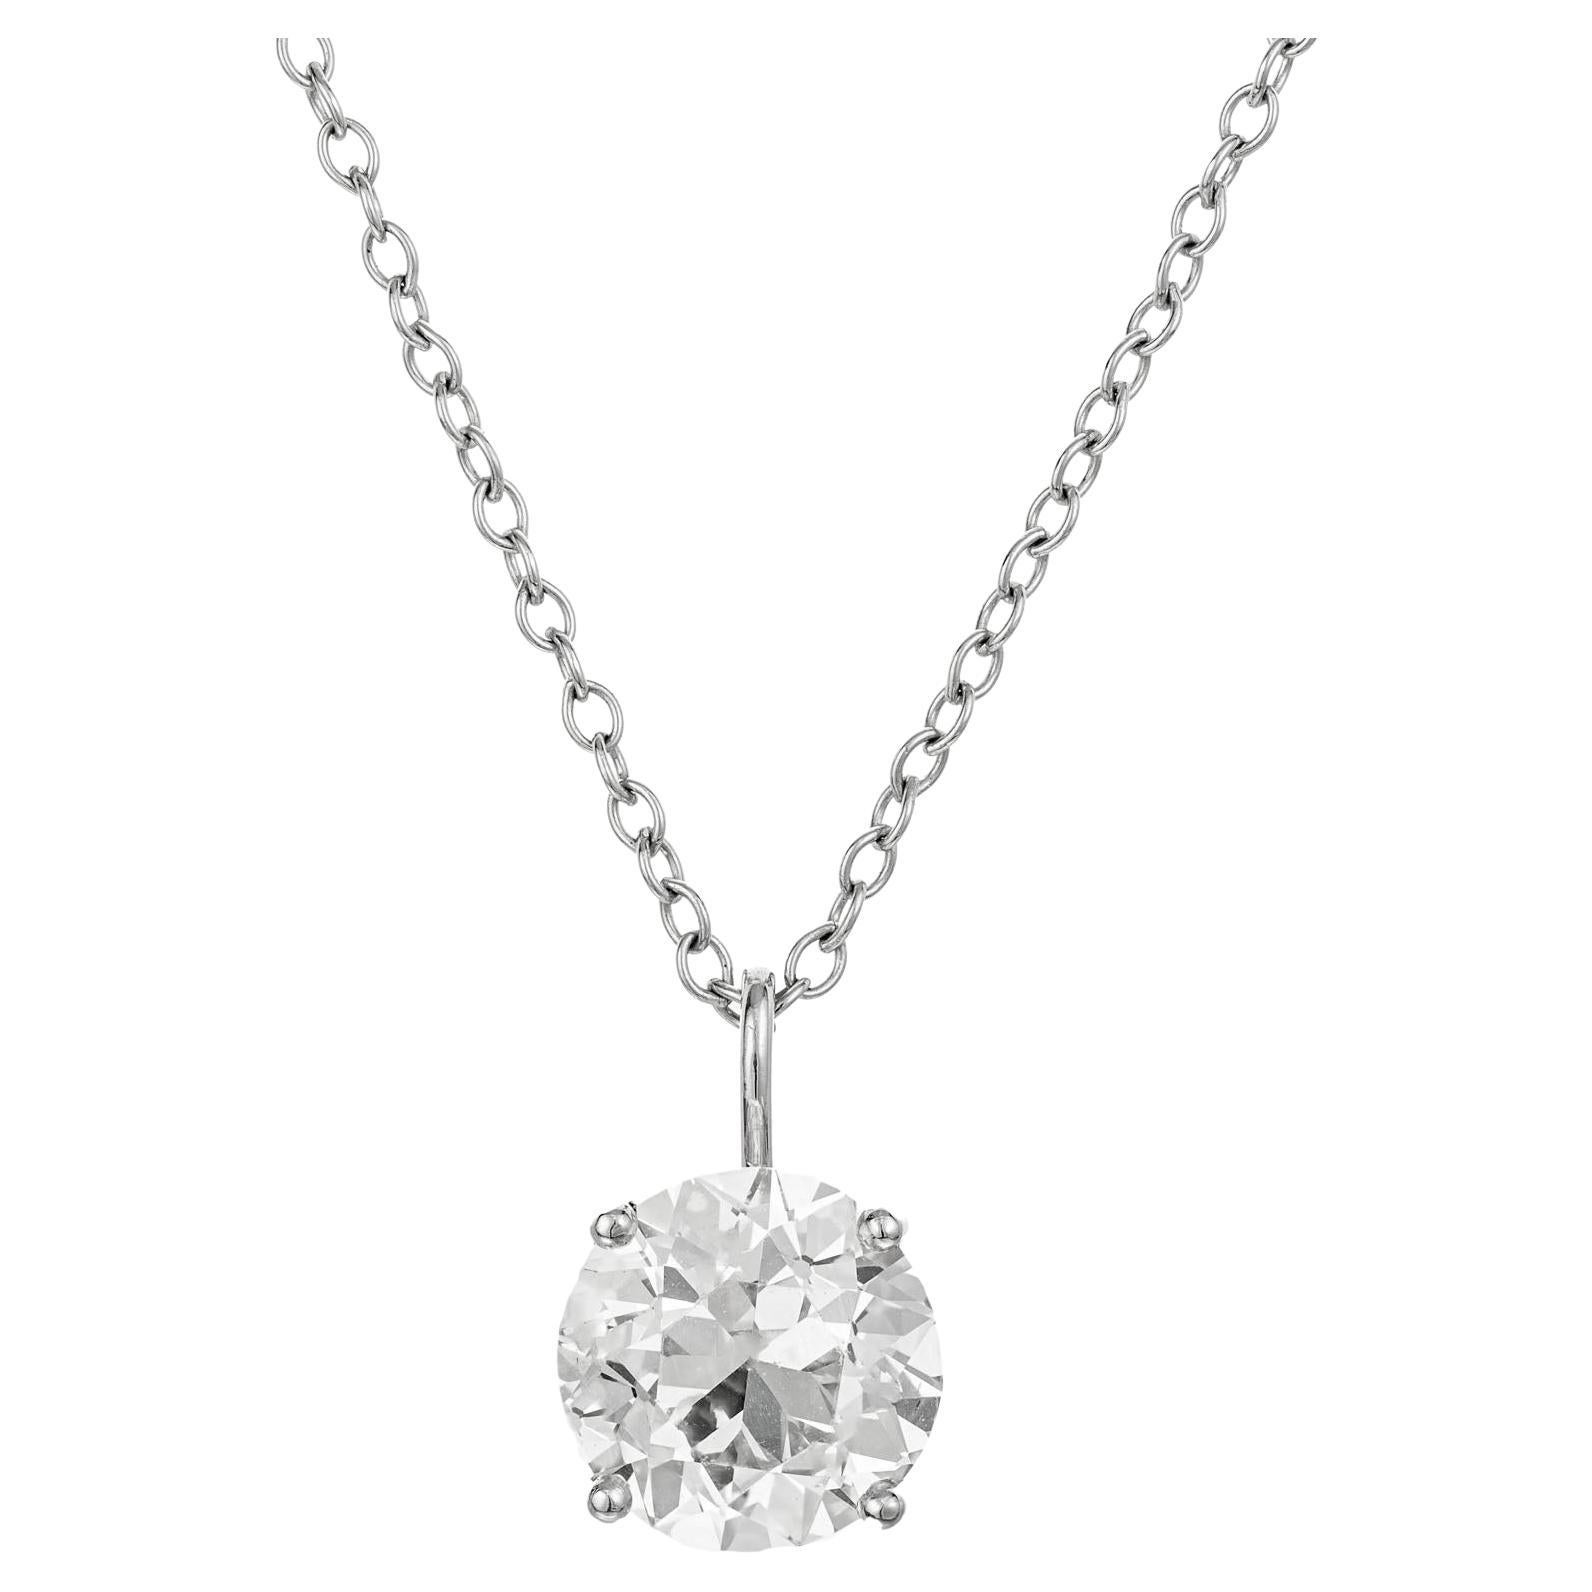 Peter Suchy GIA Certified 3.02 Carat Diamond Platinum Pendant Necklace